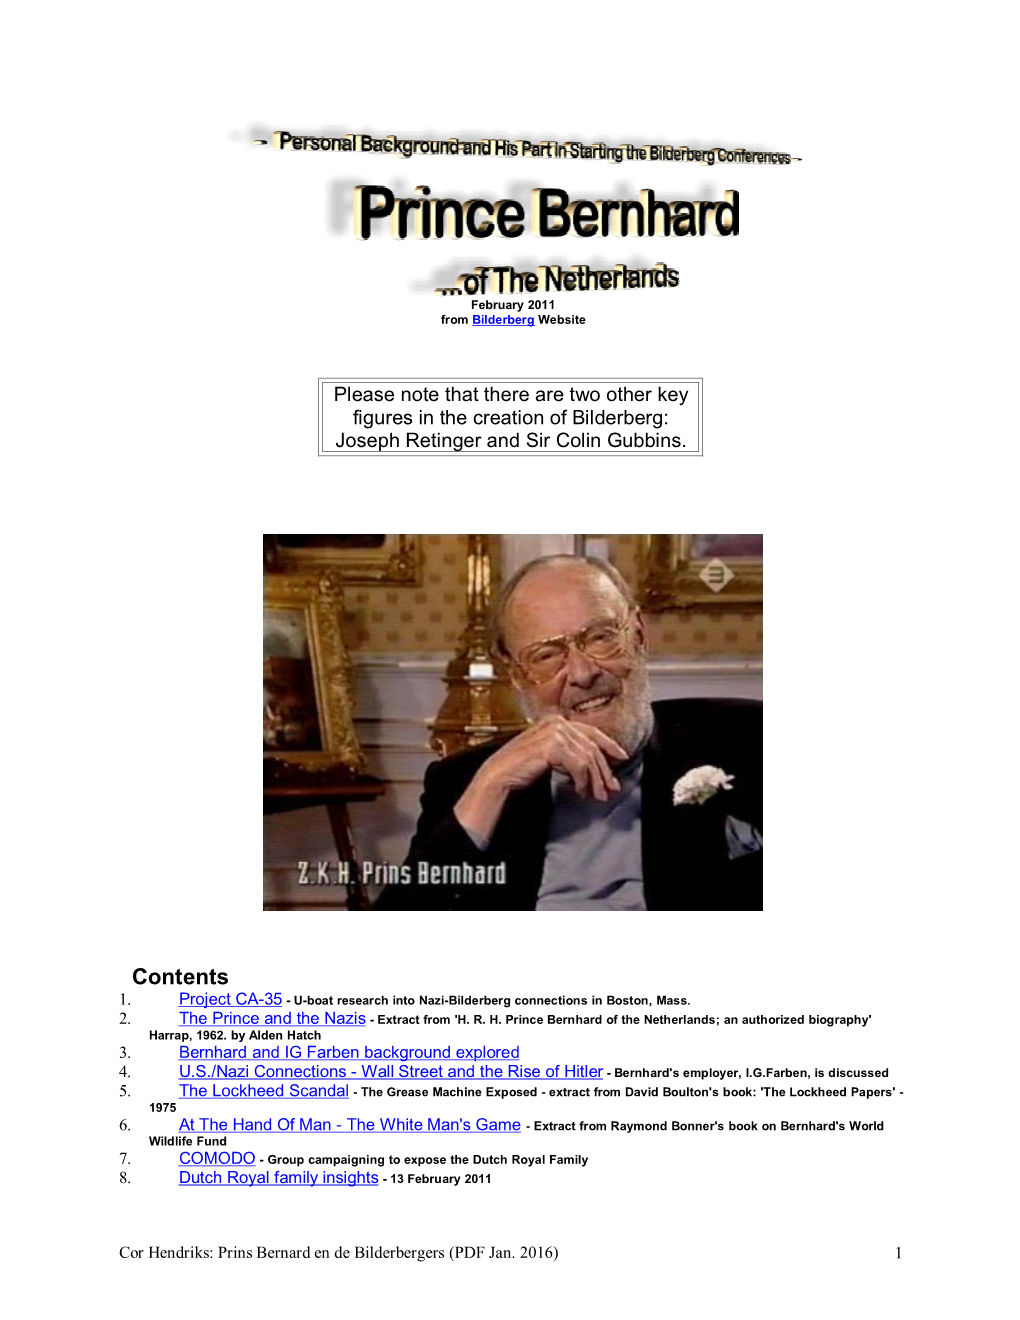 Prins Bernhard Bilderberg